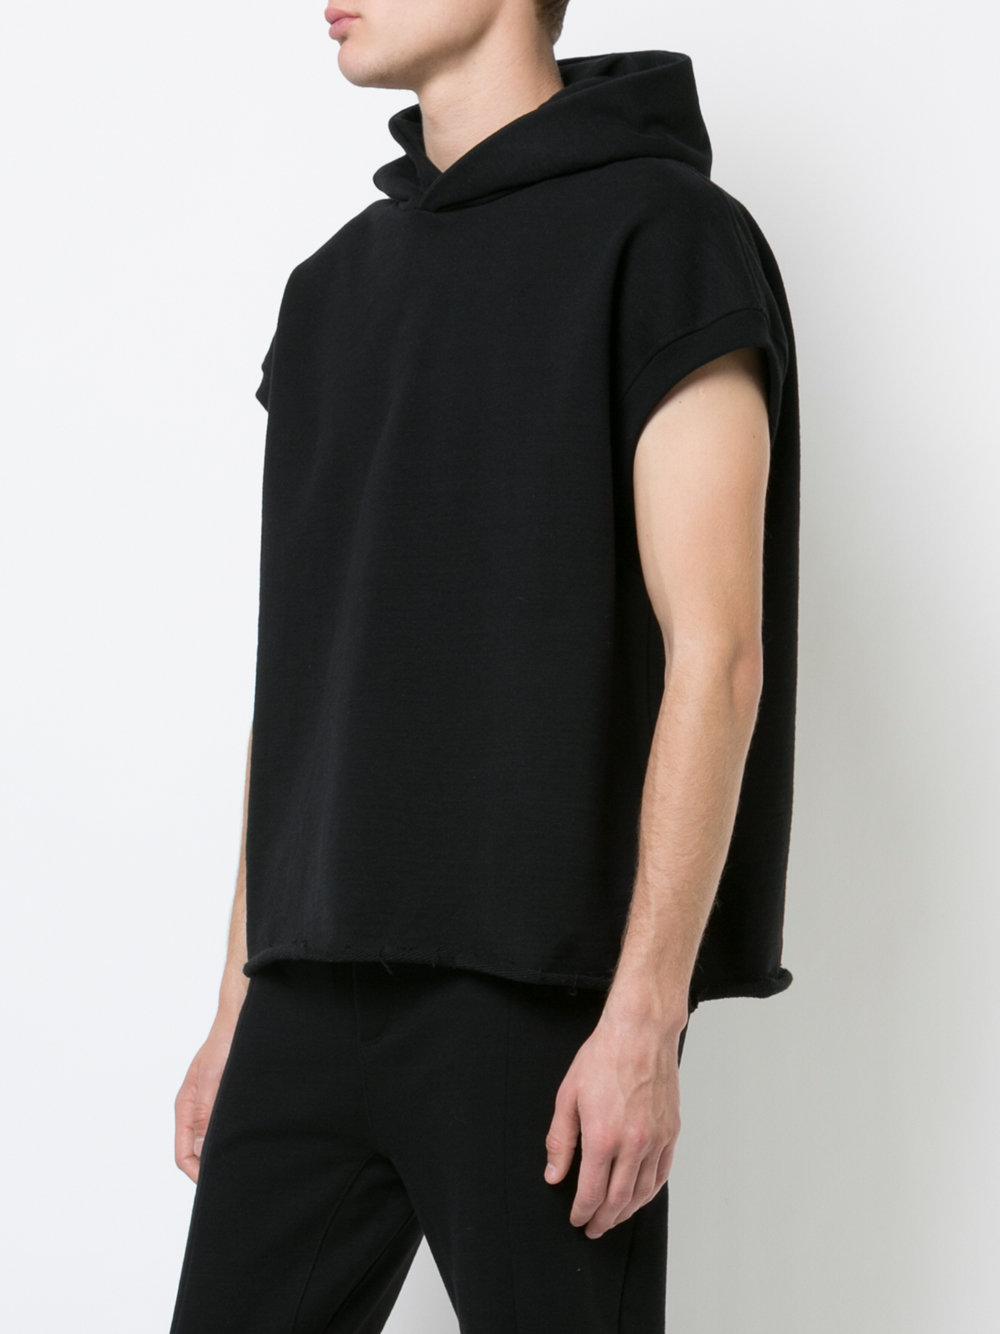 The Da-ILY Zei-tge-ist Summer Fashion Mens Short Sleeve Hoodies